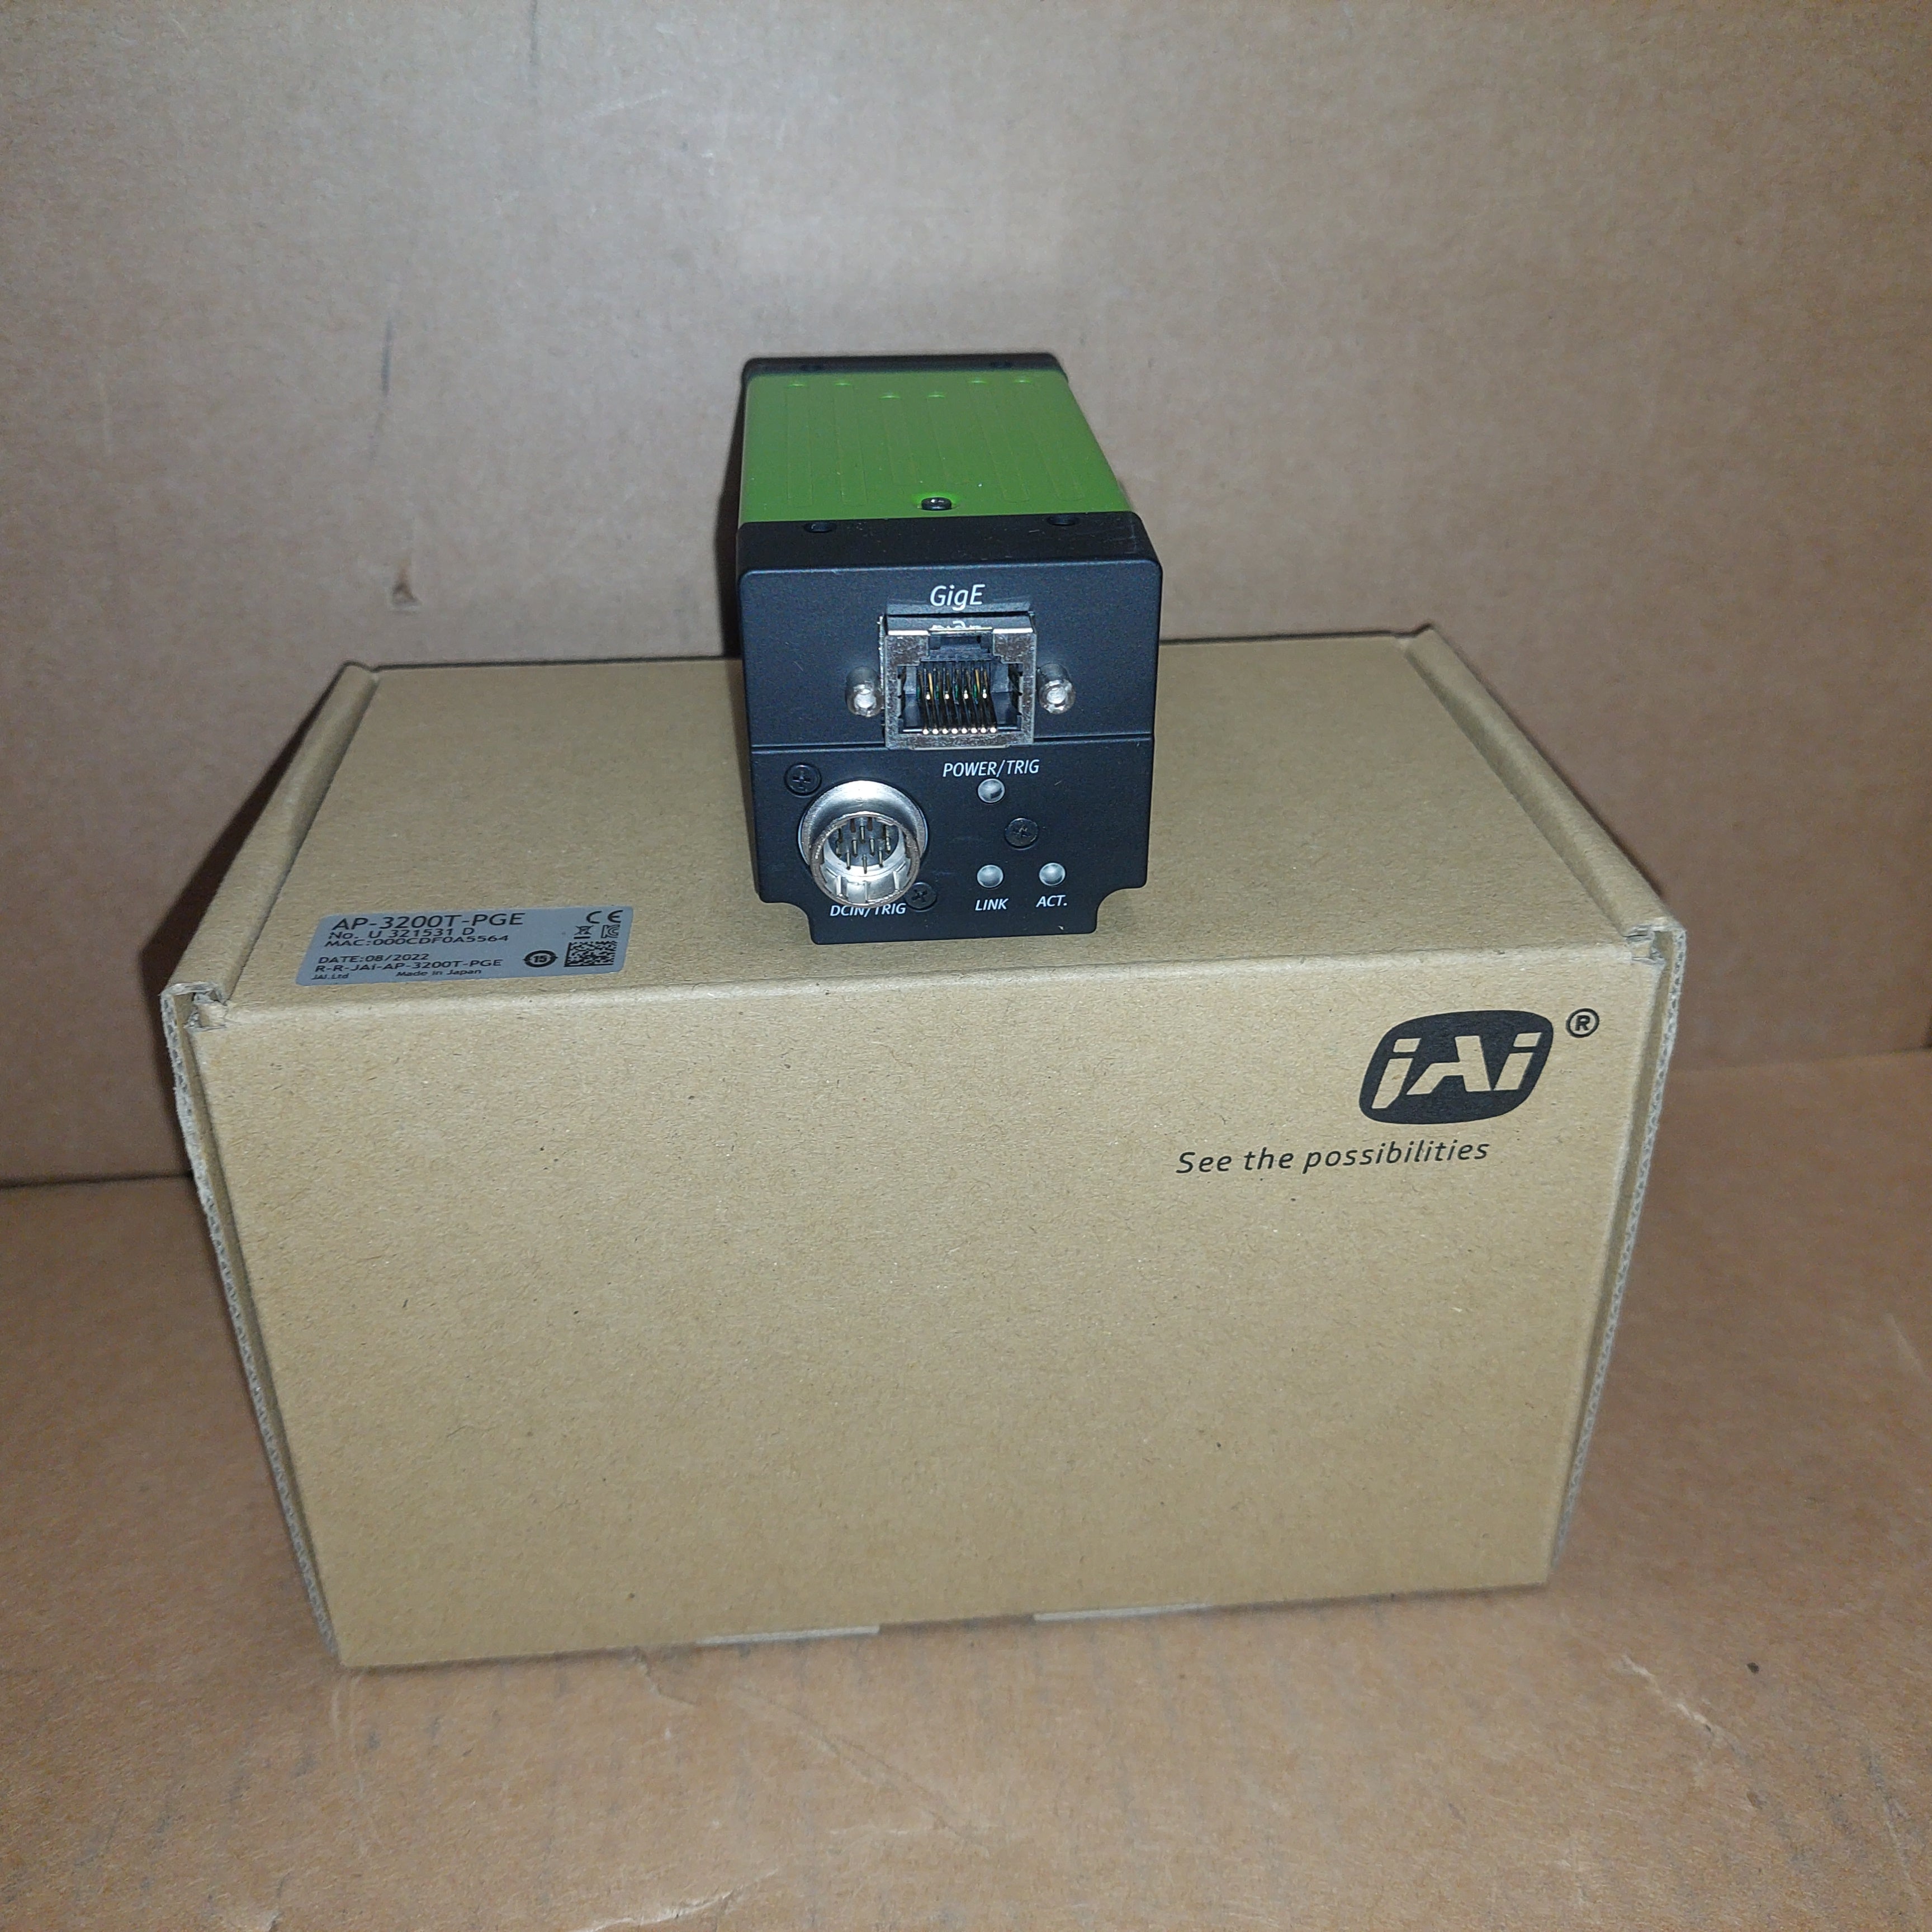 Jai AP-3200T-PGE 1/1.8" Format 3x3.2MP 12FPS IMX265 Machine Vision Camera New